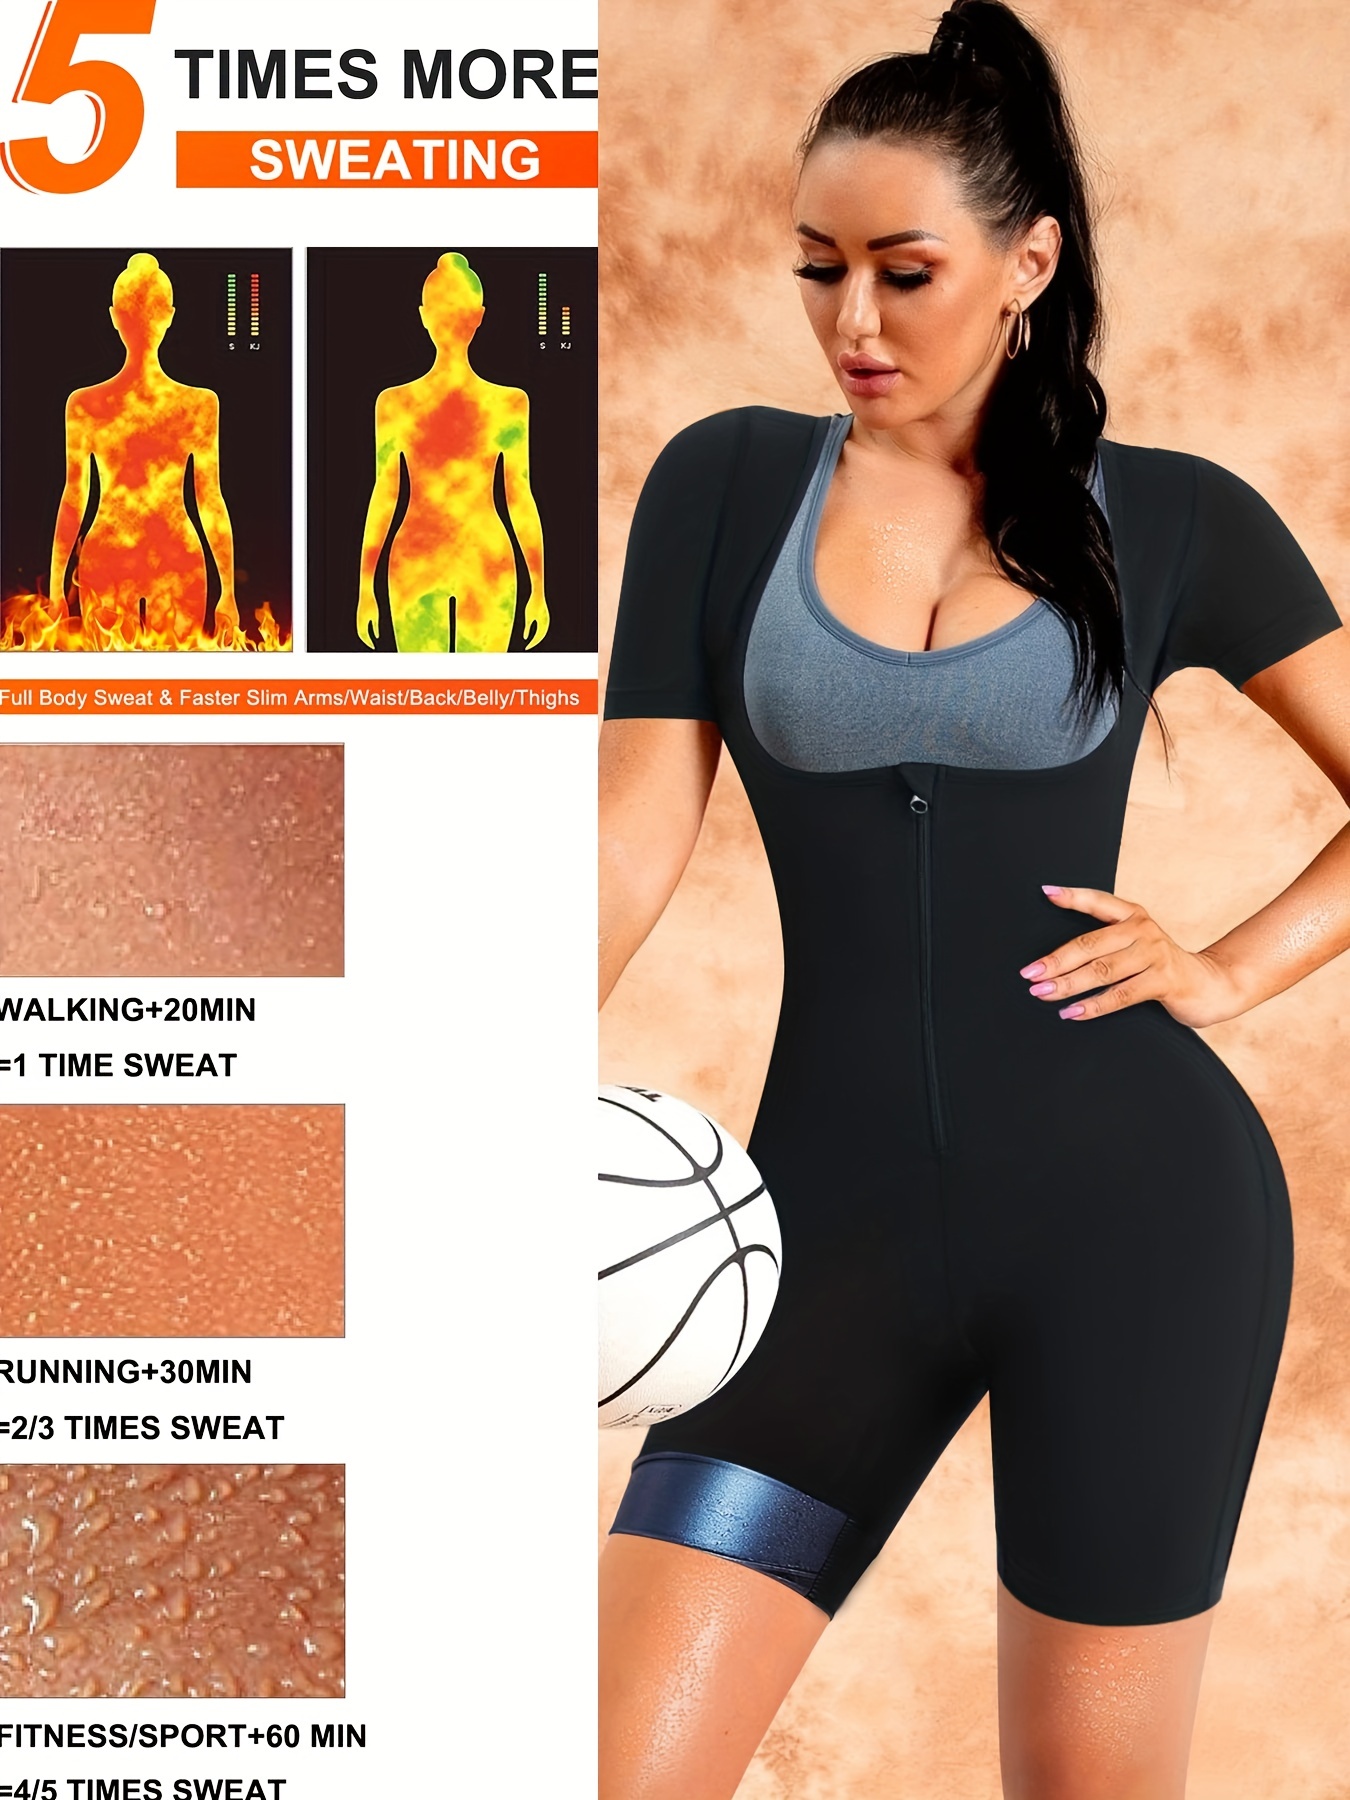 3 In 1 Zipper Full Body Shaper Sweat Sauna Suit For Women, Sweat Slimmer  Workout Top With Sleeve Shorts, Women's Activewear